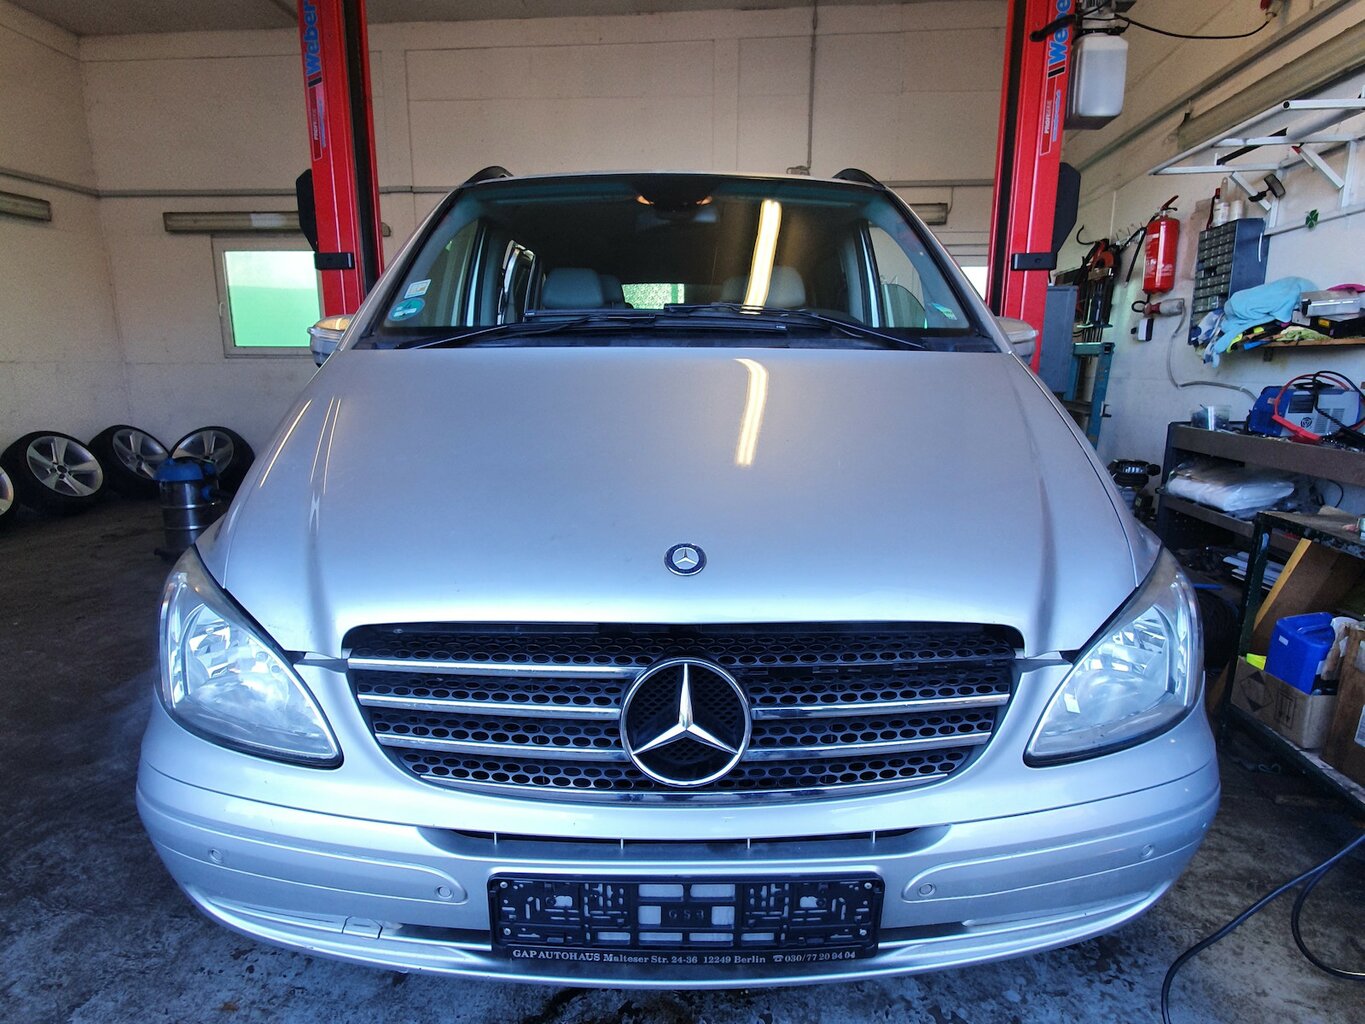 Mercedes-Benz Viano 3.0 CDI Trend Edition Motorprobleme